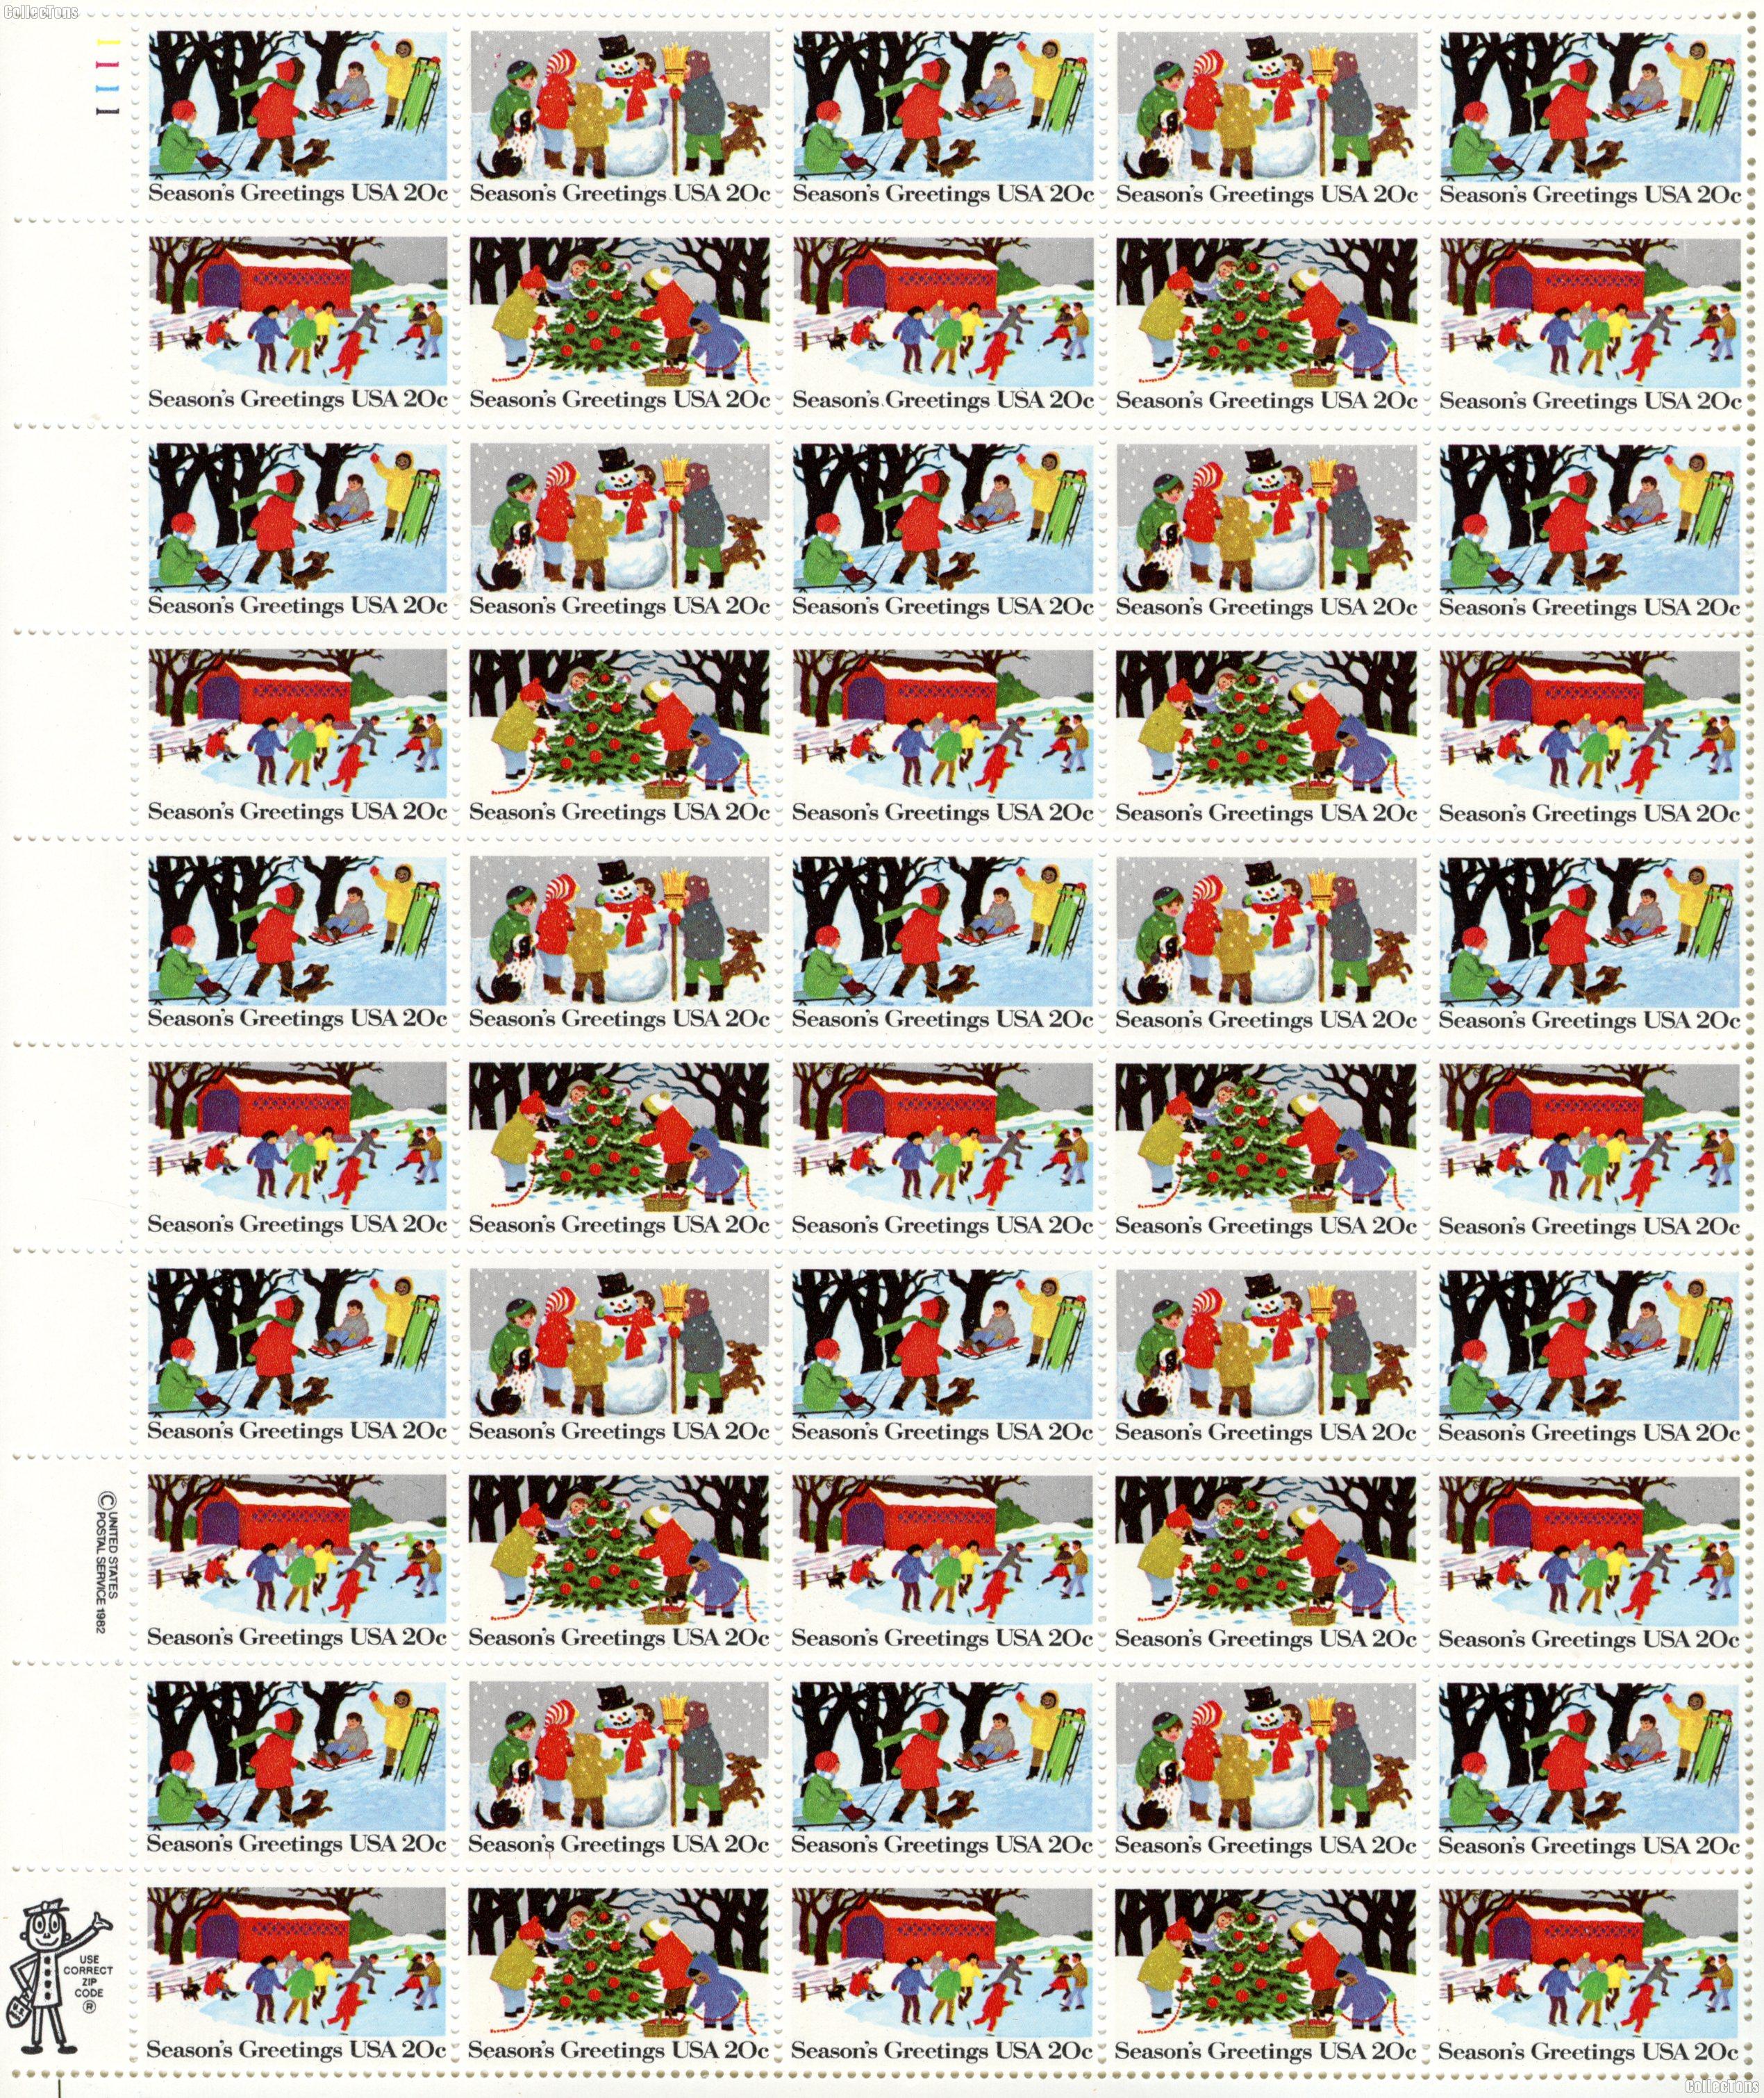 1982 Season's Greetings 20 Cent US Postage Stamp MNH Sheet of 50 Scott #2027-2030